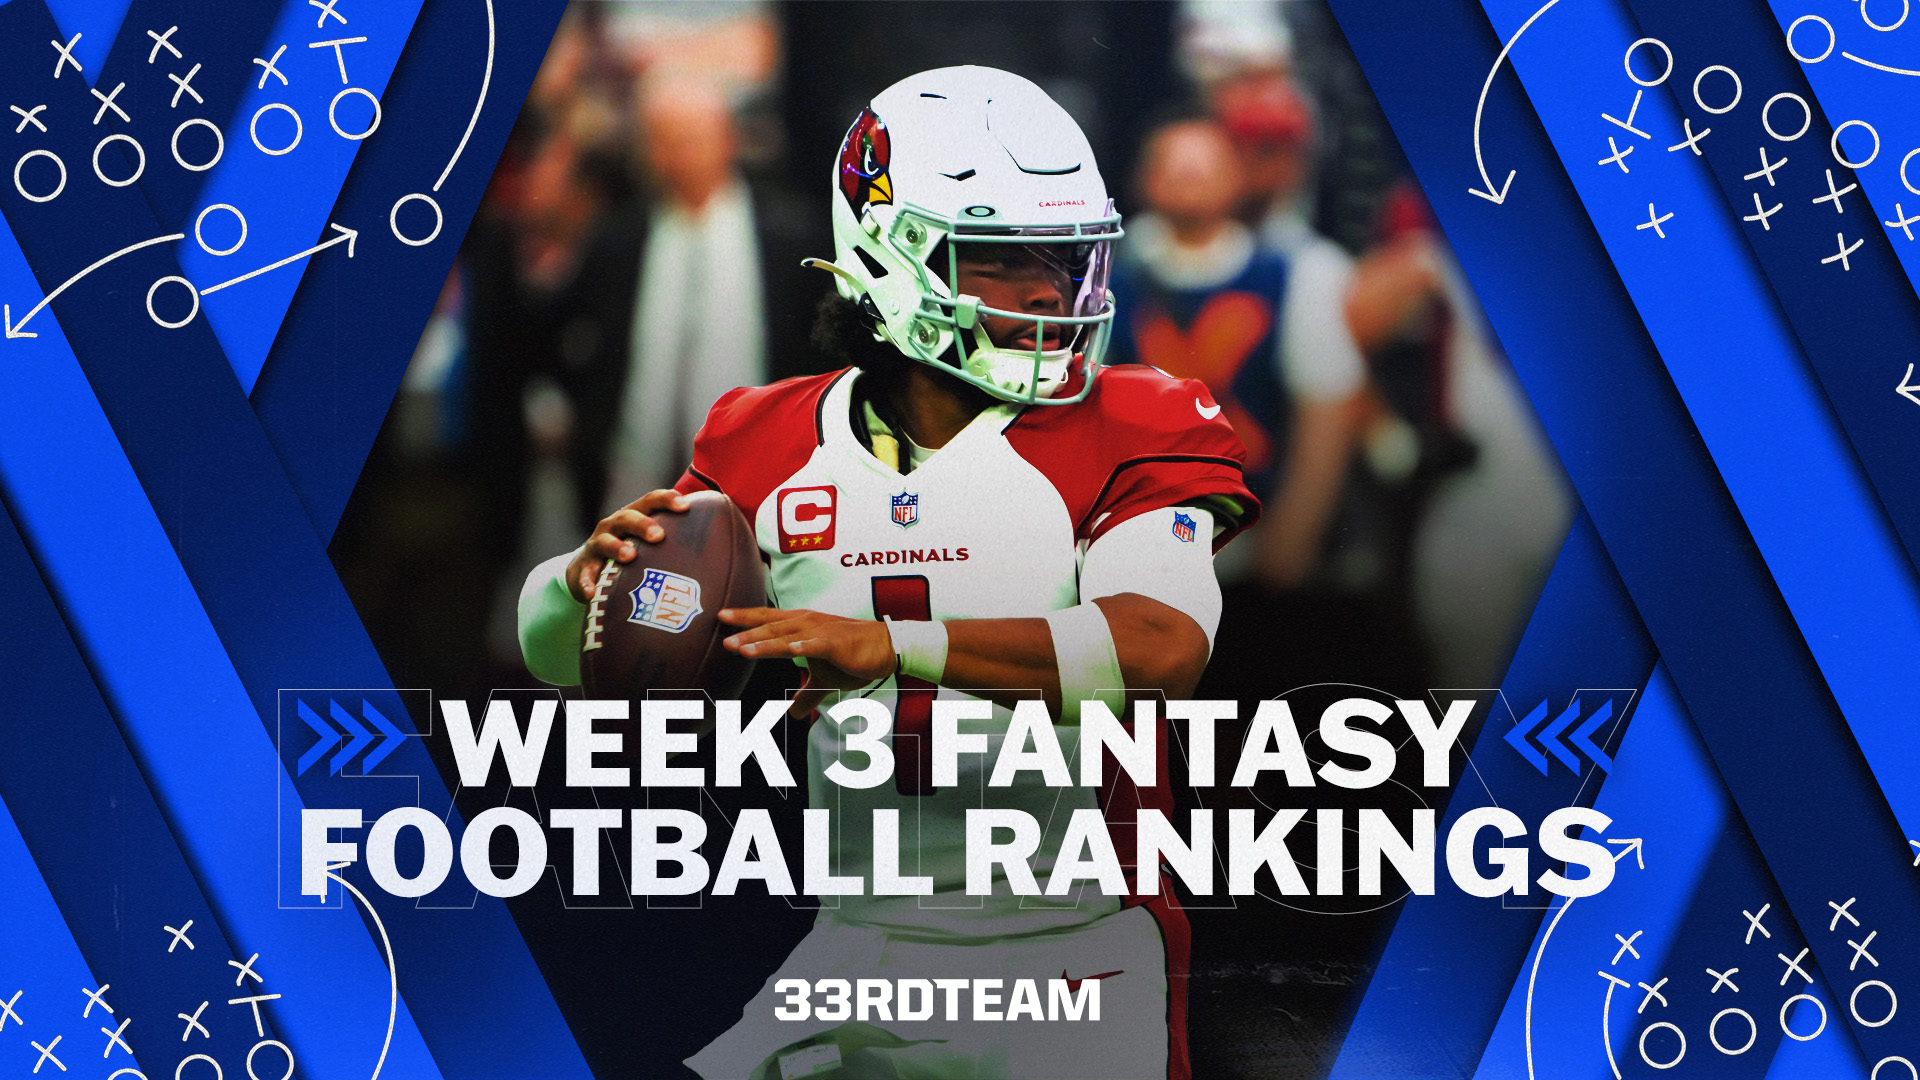 Kevin Wheeler’s Week 3 Fantasy Football Rankings